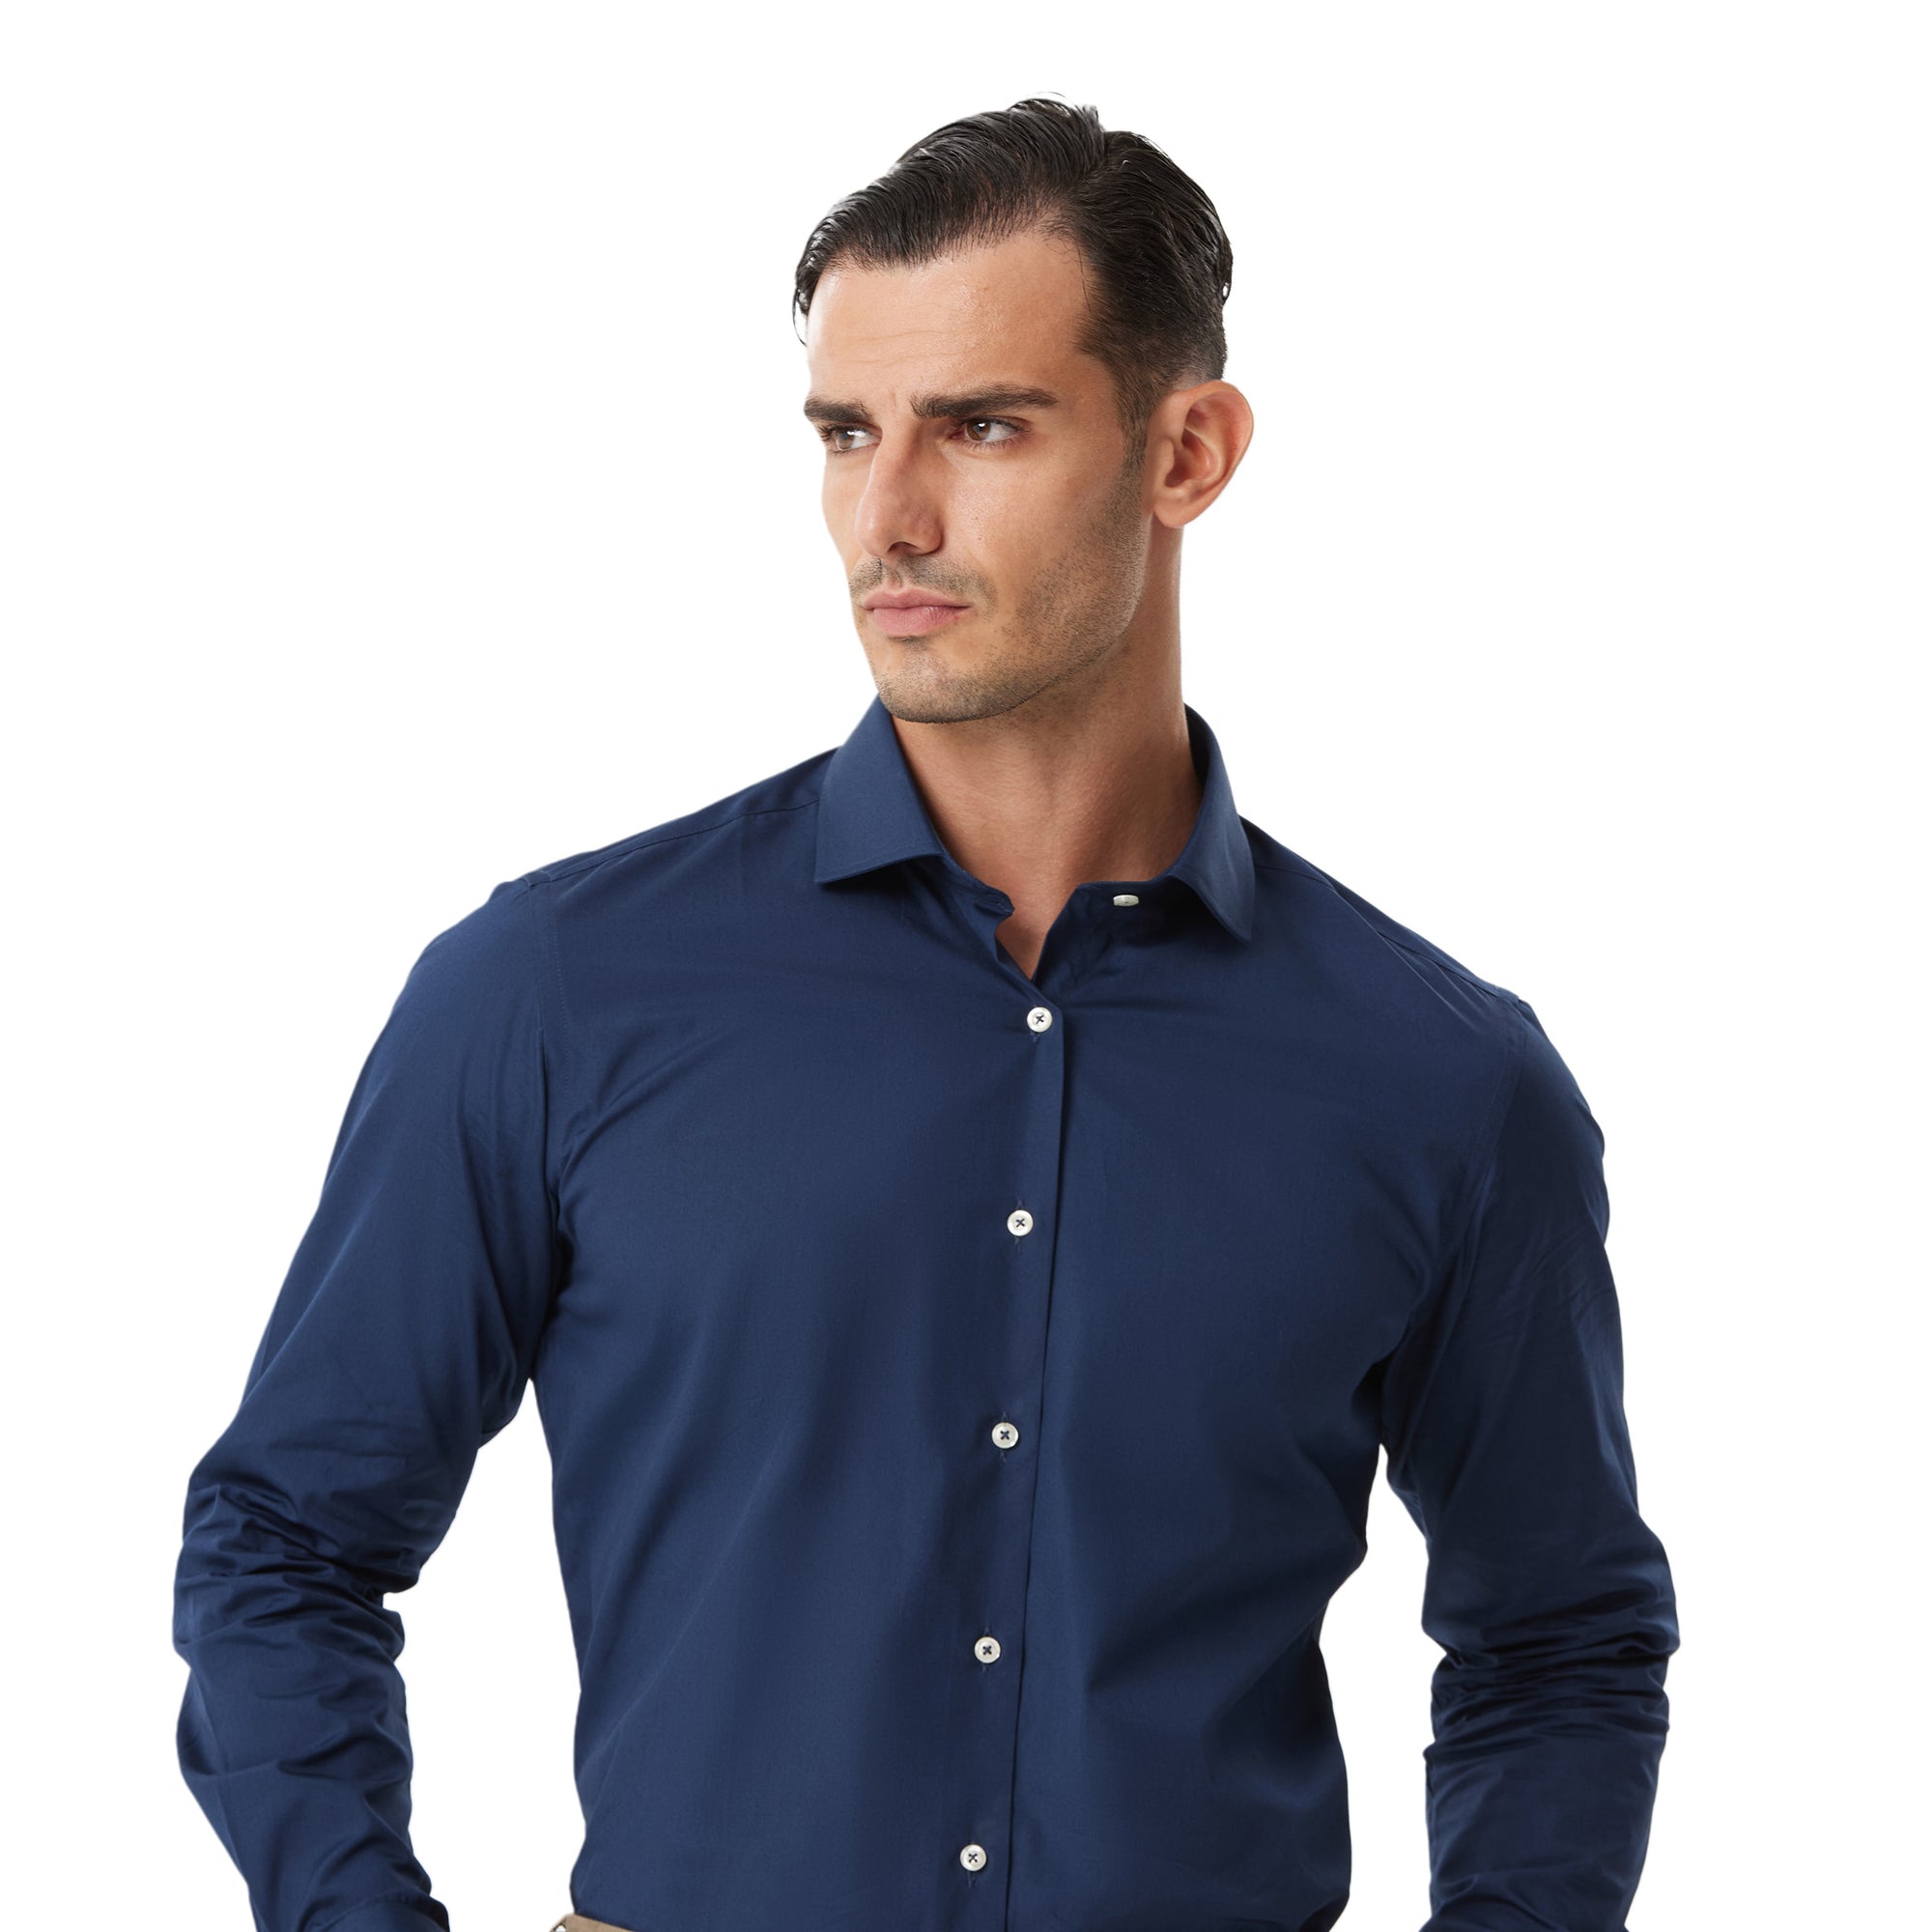 Navy Blue Custom Fit Cotton Shirt